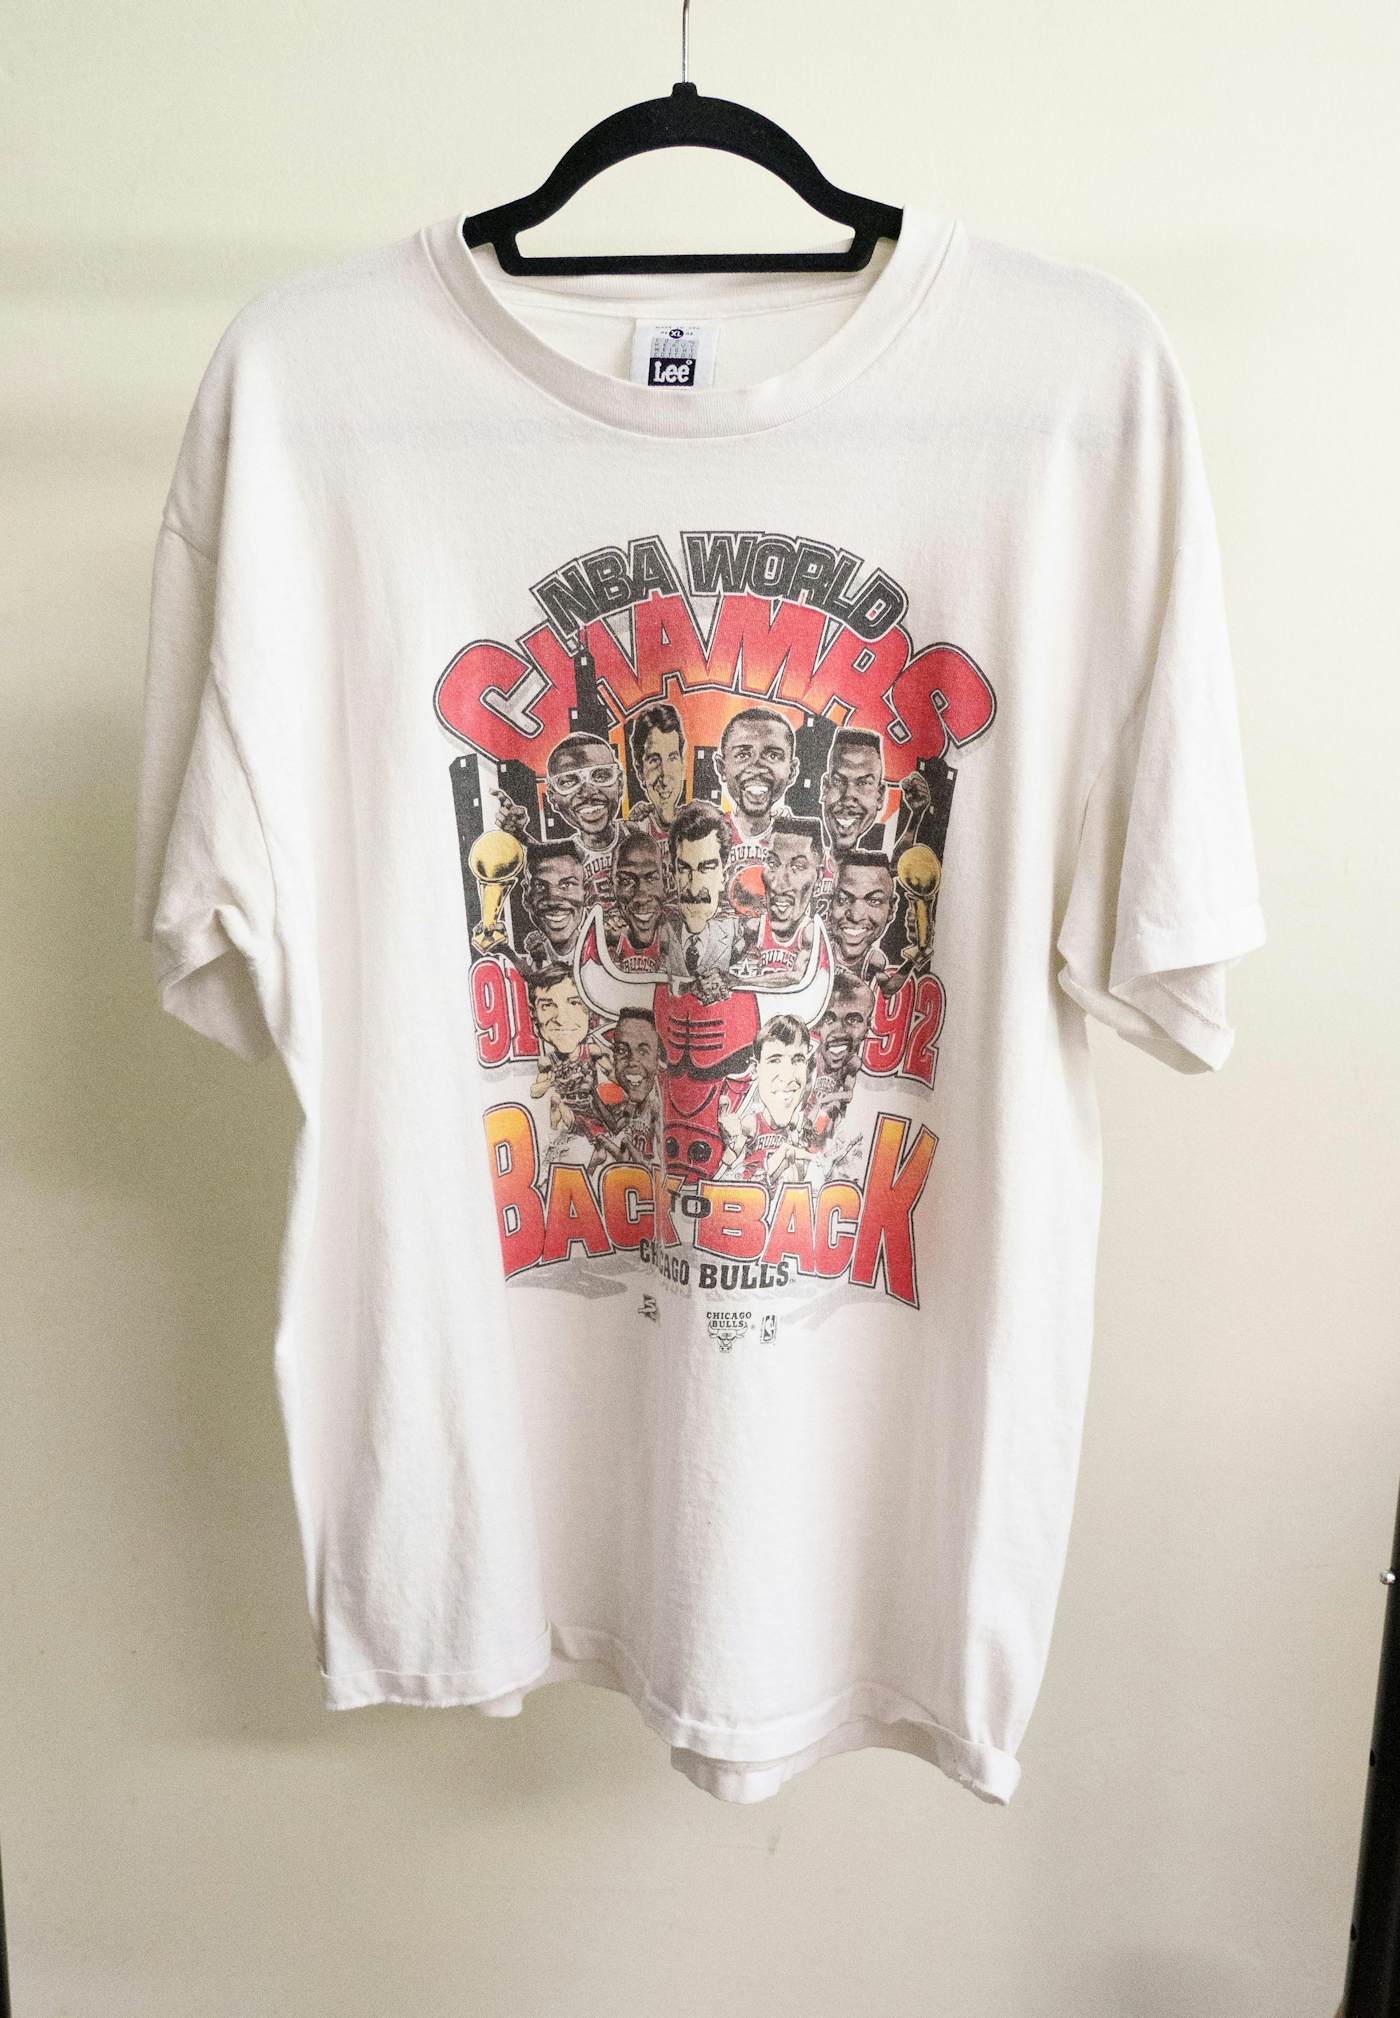 Vintage 1992 NBA Chicago Bulls Back To Back World Champions T Shirt